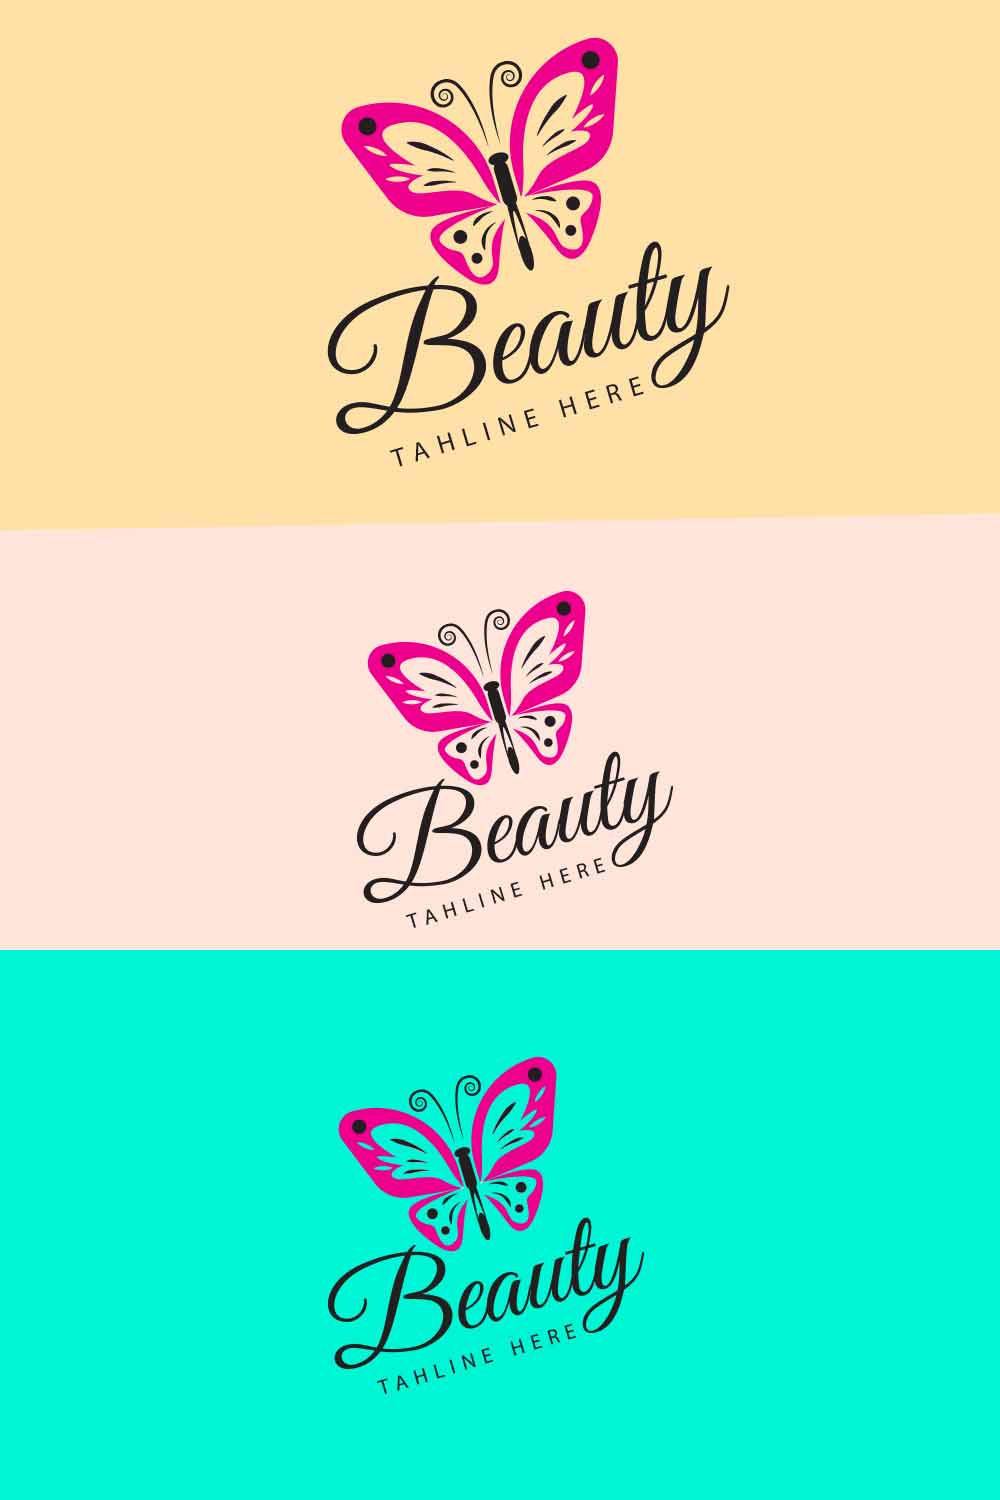 Creative Beauty Salon Logo Template pinterest image.